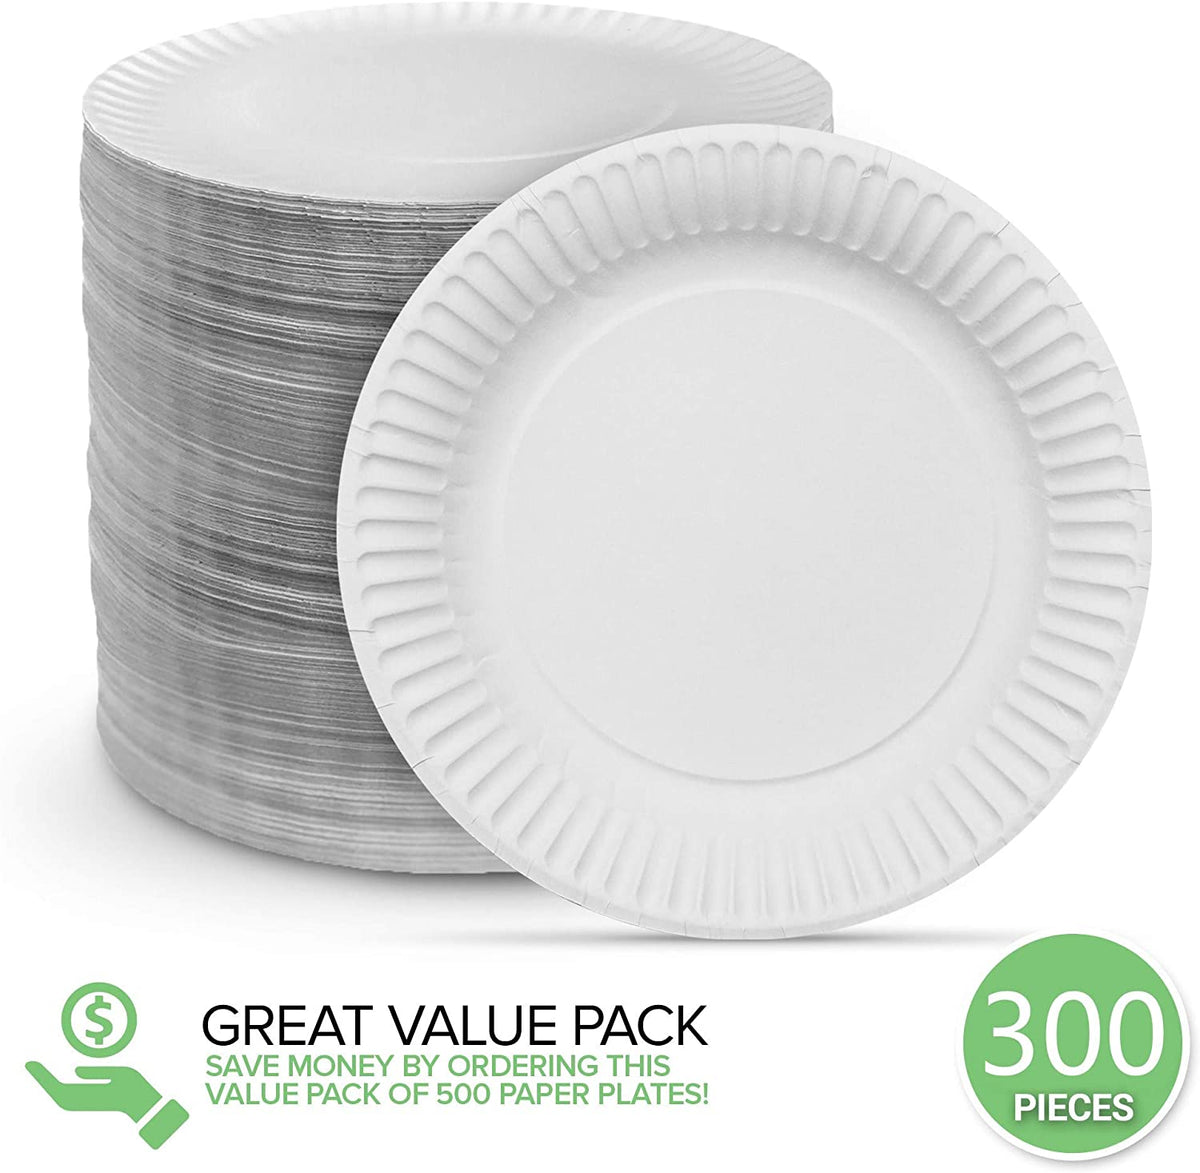 Perfectware 6 Inch Paper Plates. Disposable Paper Plates. Case